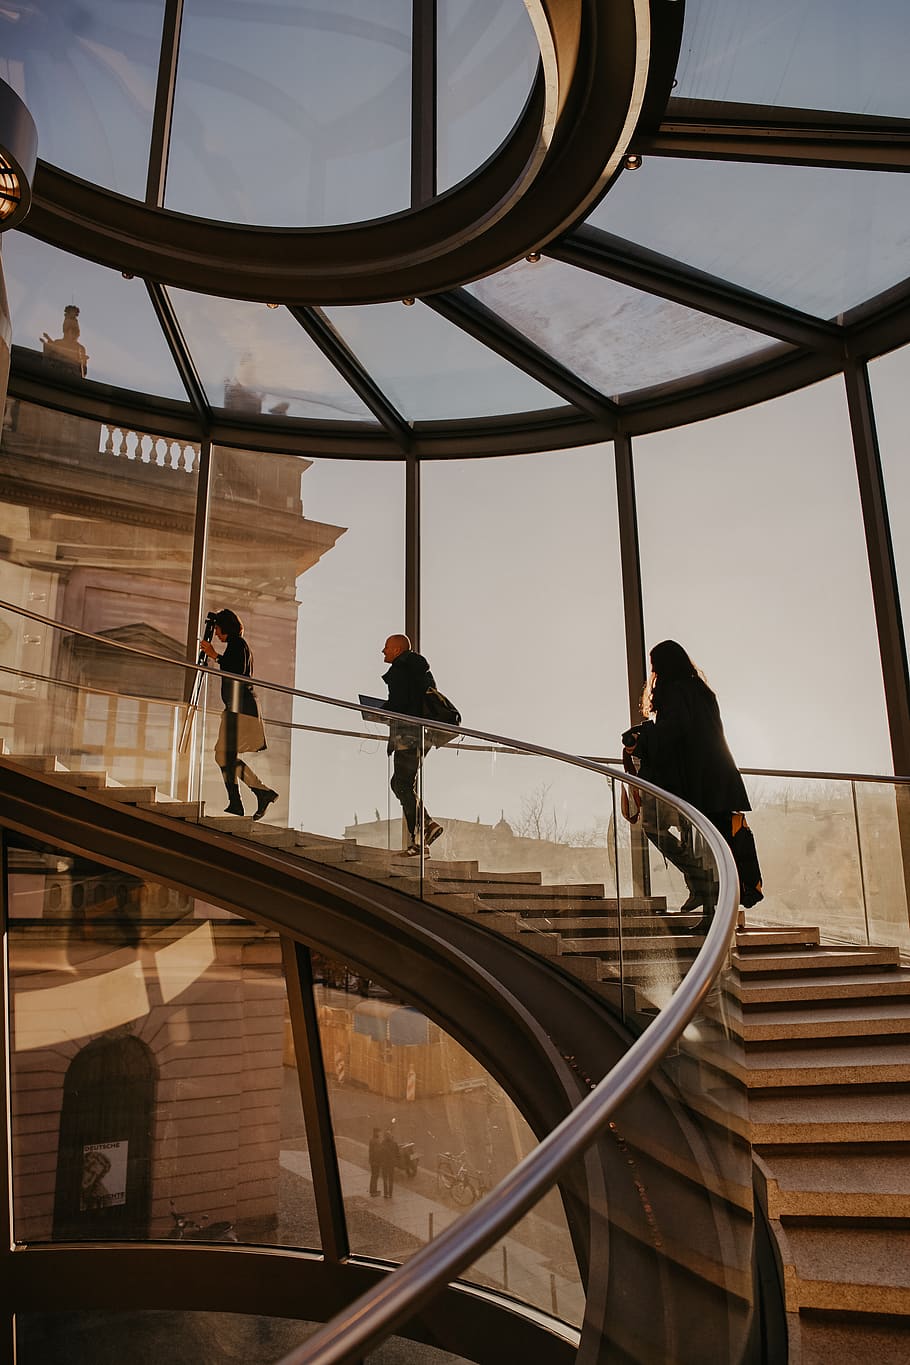 three women walking upstairs at the glass building, handrail